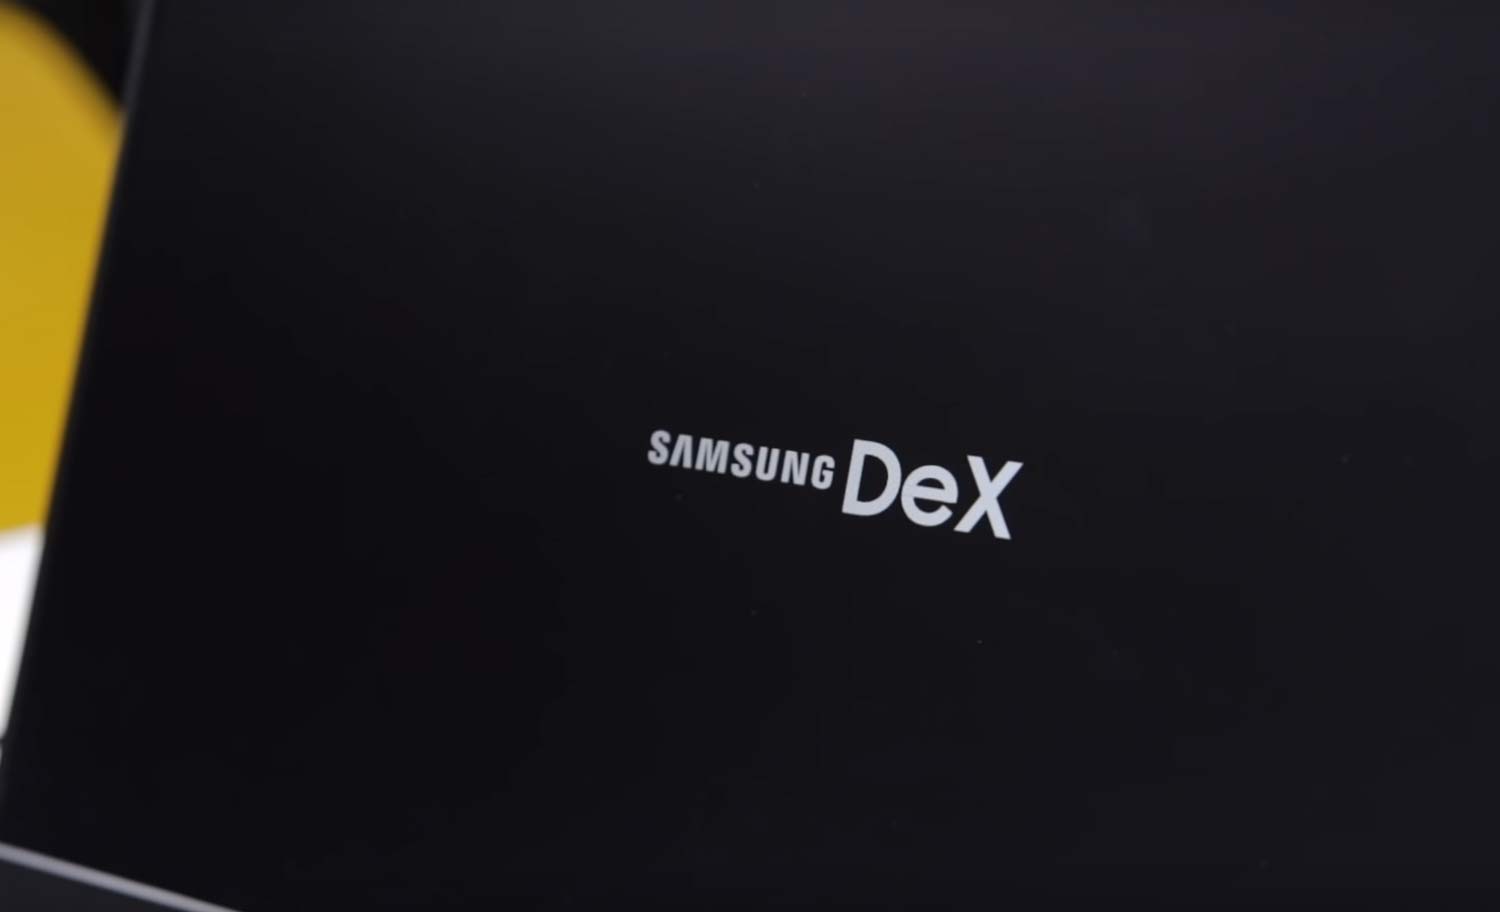 Samsung Dex best wallpapers possible lol Sam! : r/SamsungDex